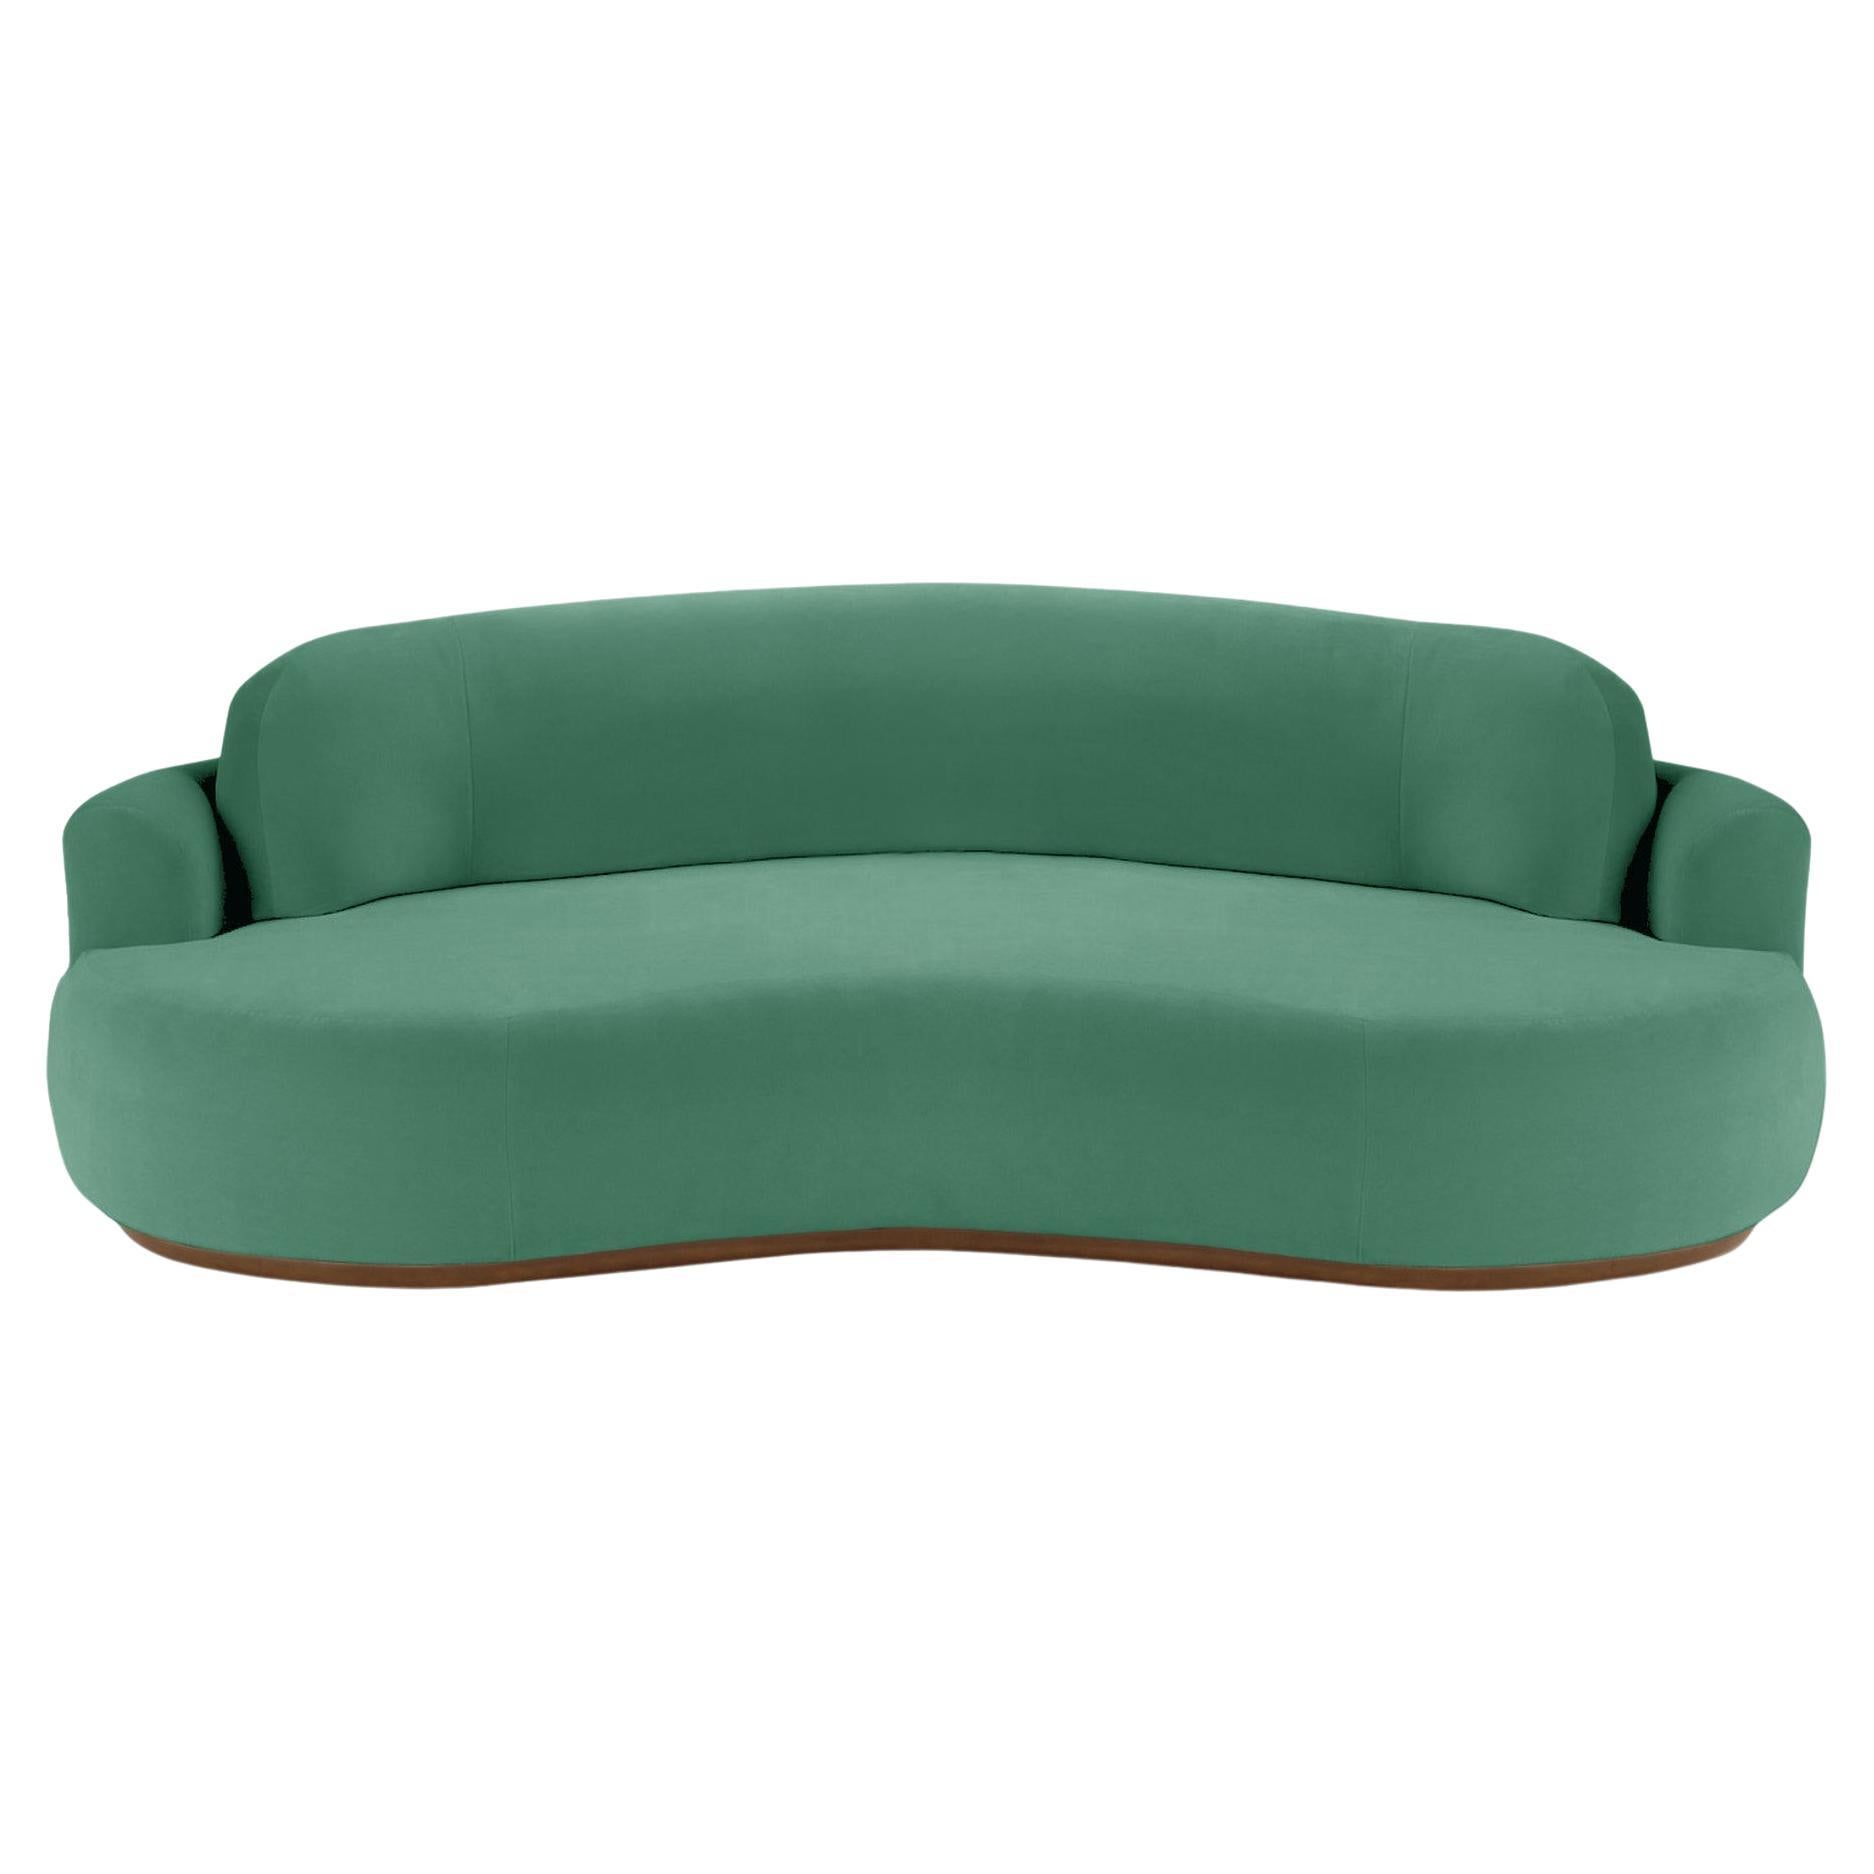 Naked Round Sofa, Medium with Beech Ash-056-1 and Paris Green